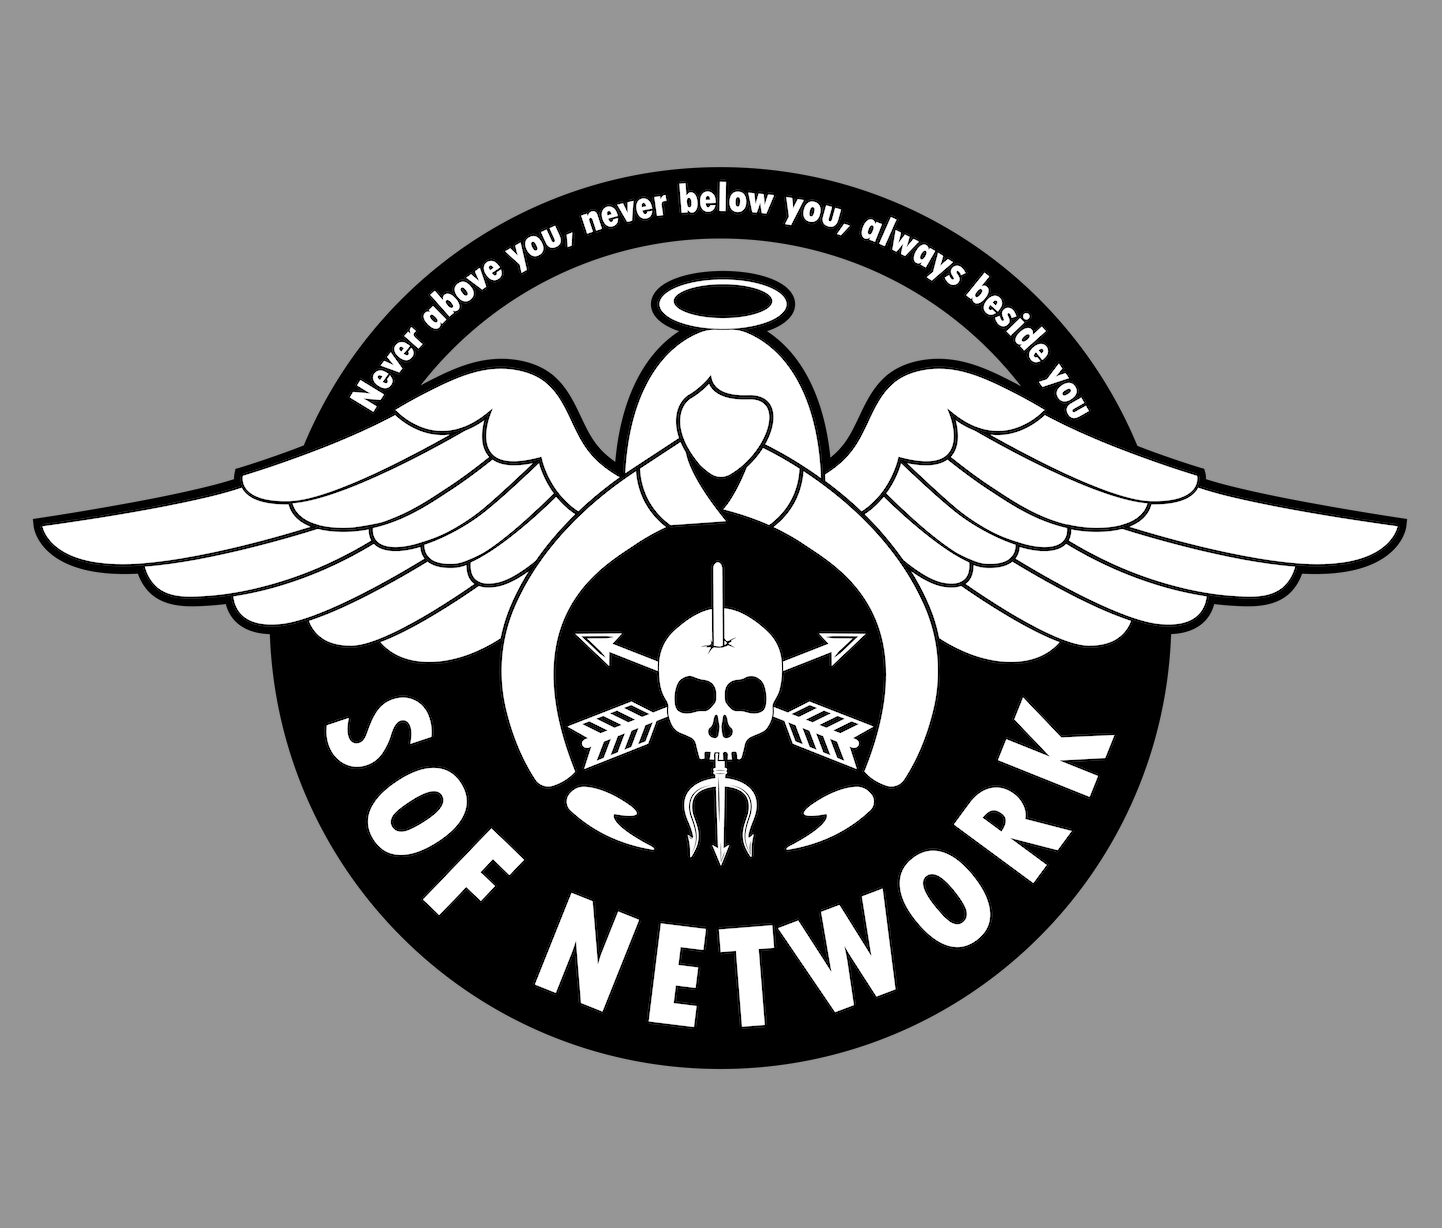 SOF Network logo